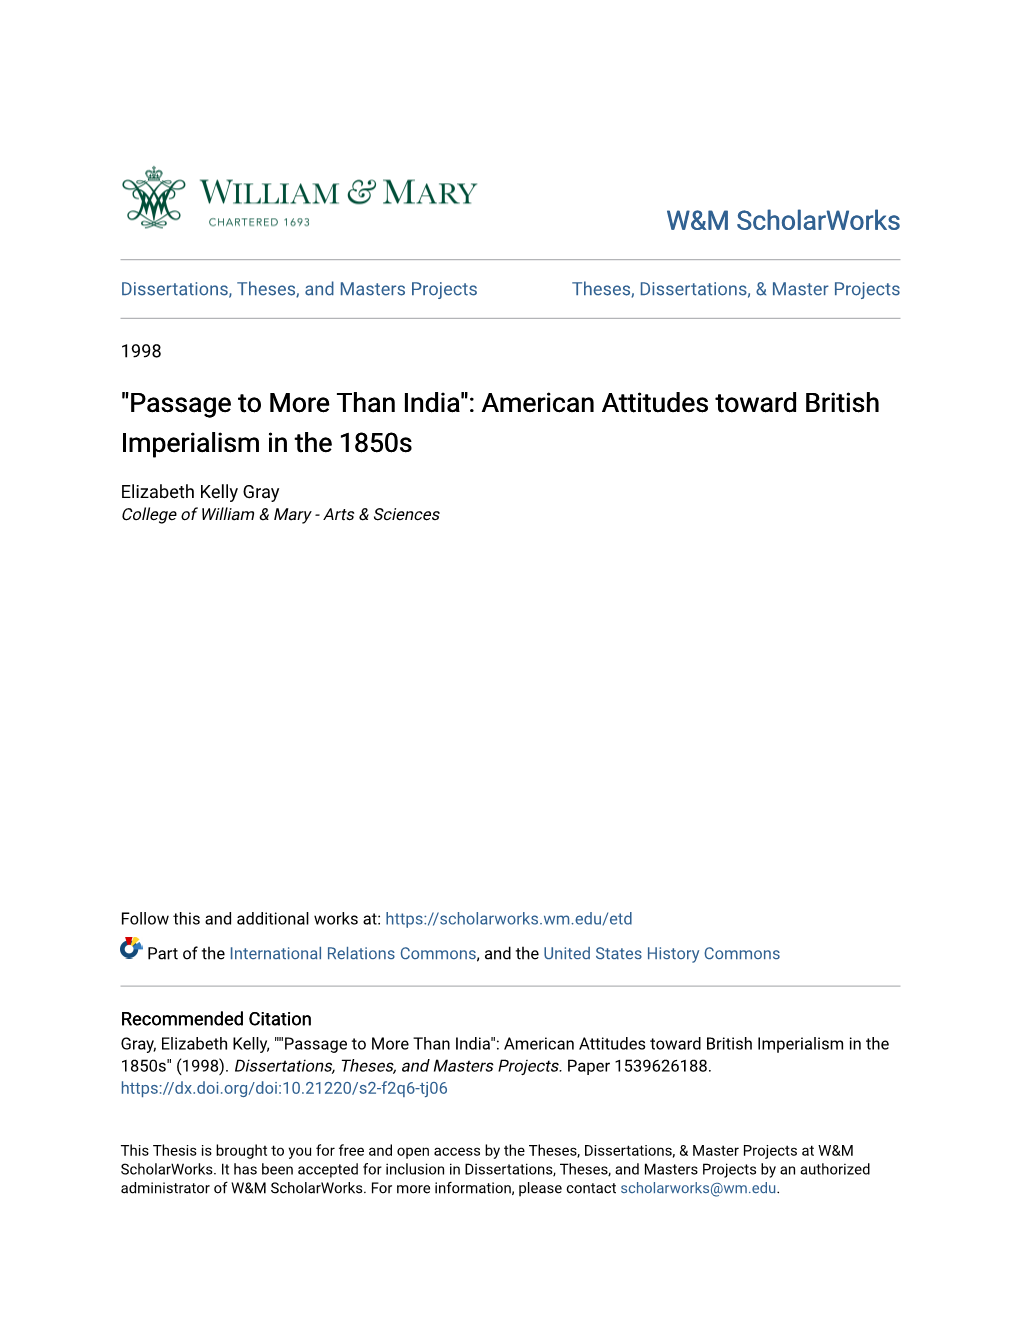 American Attitudes Toward British Imperialism in the 1850S